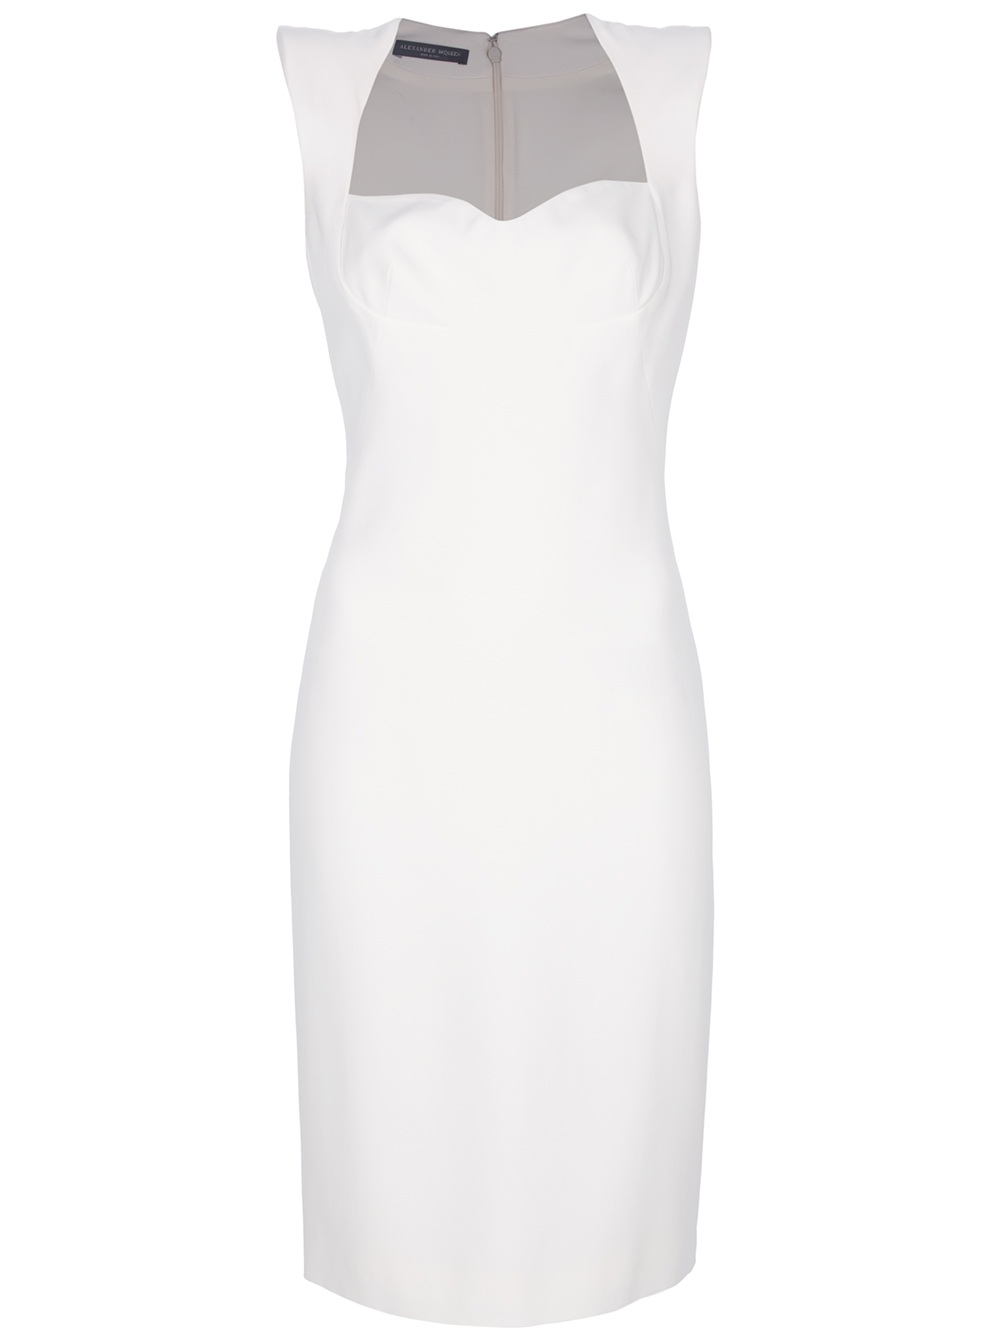 Lyst - Alexander Mcqueen Crepe Pencil Dress in White